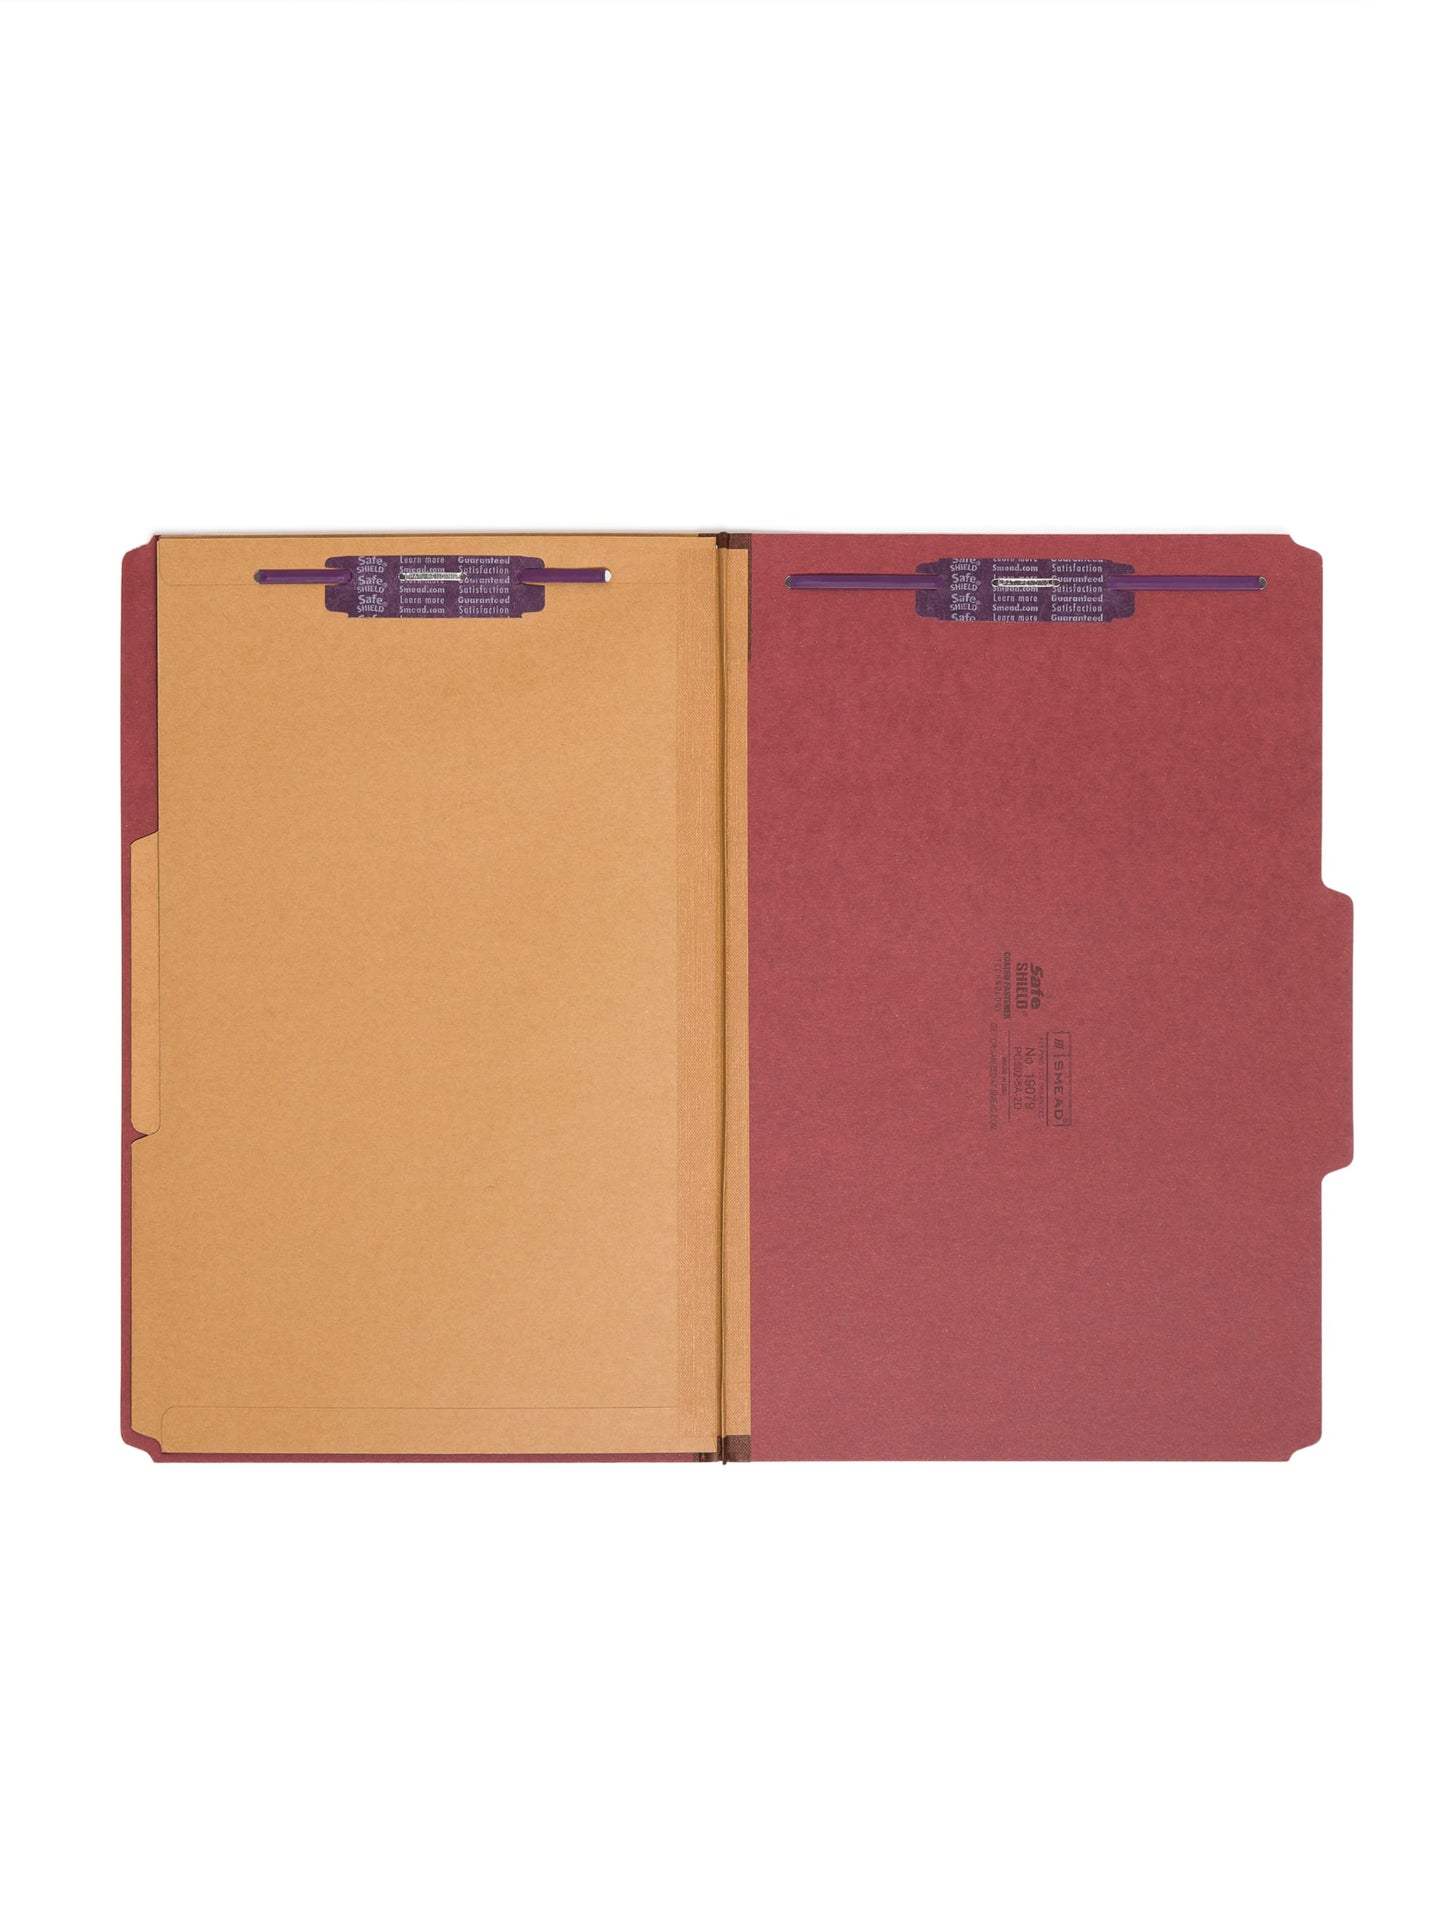 SafeSHIELD® Pressboard Classification File Folders with Pocket Dividers, Red Color, Legal Size, Set of 0, 30086486190795